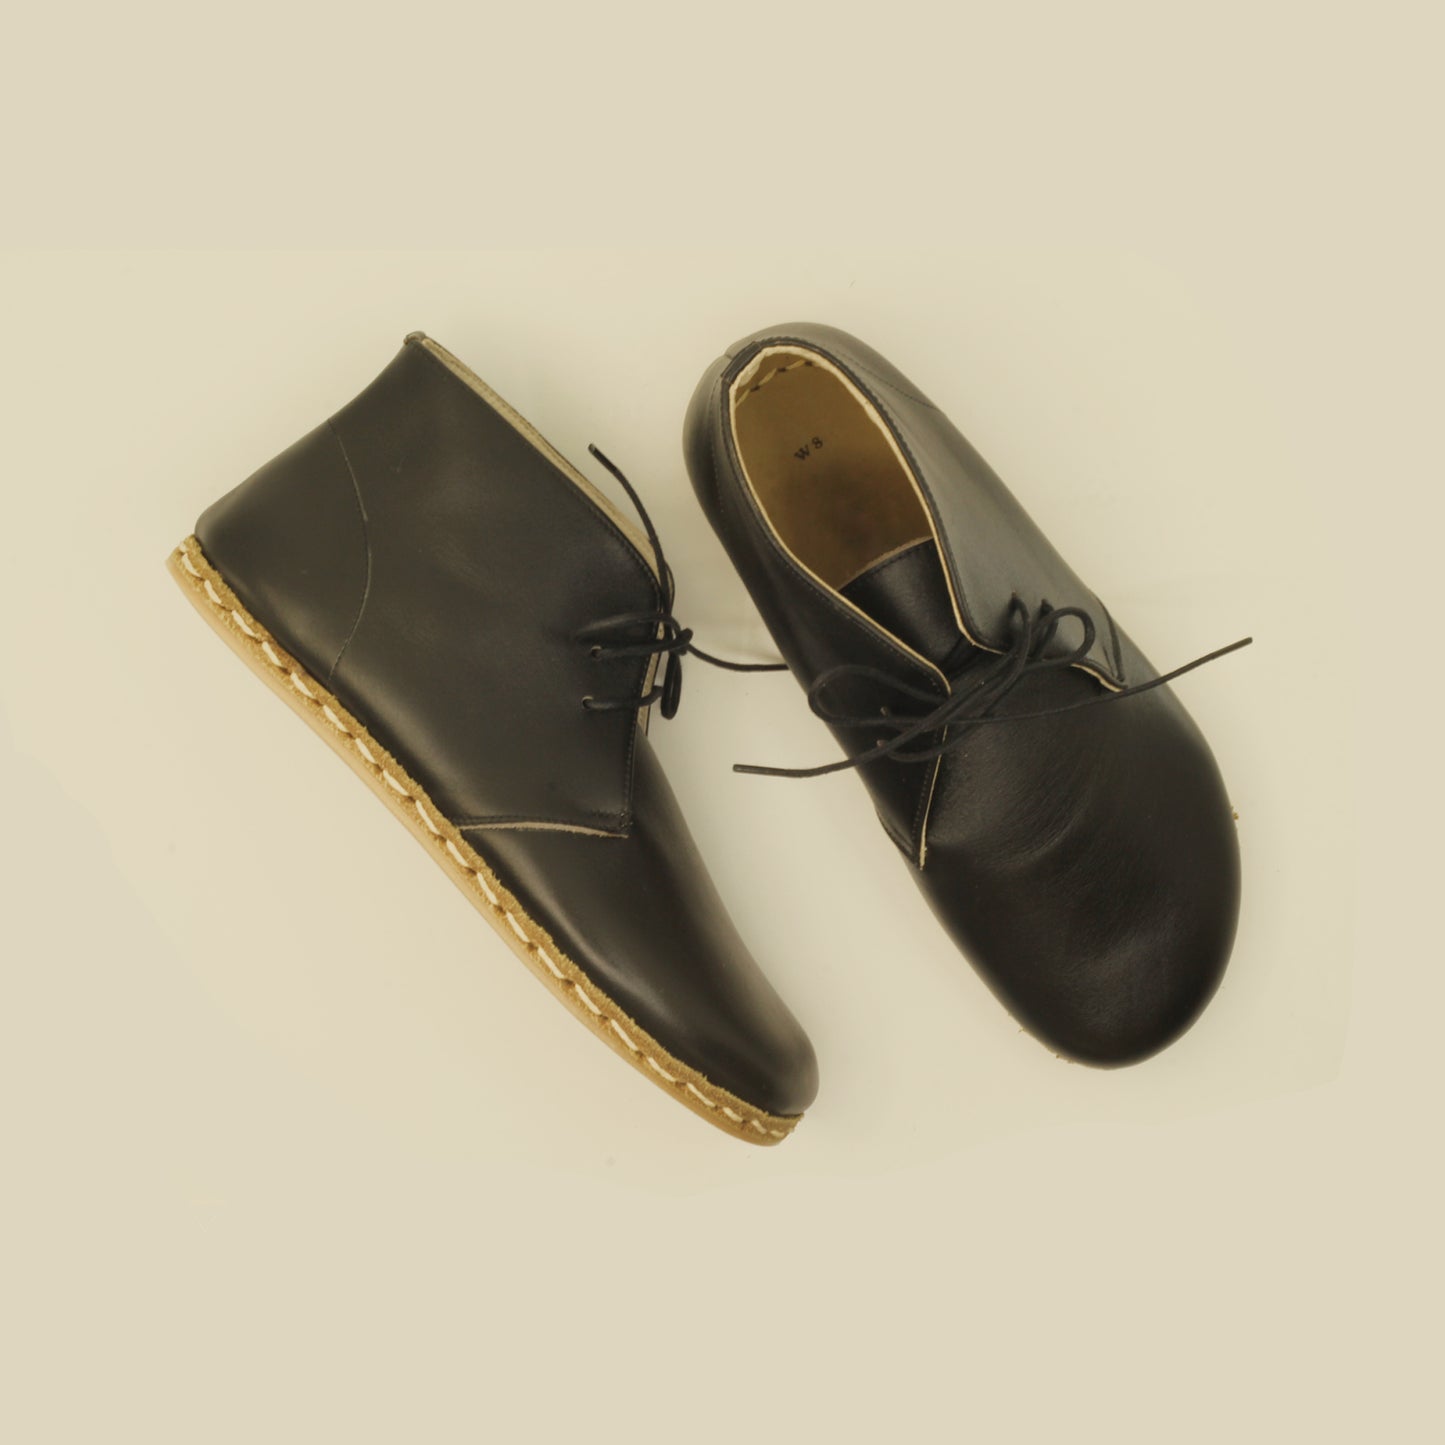 Men's Handmade Barefoot Boot - Classic Black Leather Zero Drop